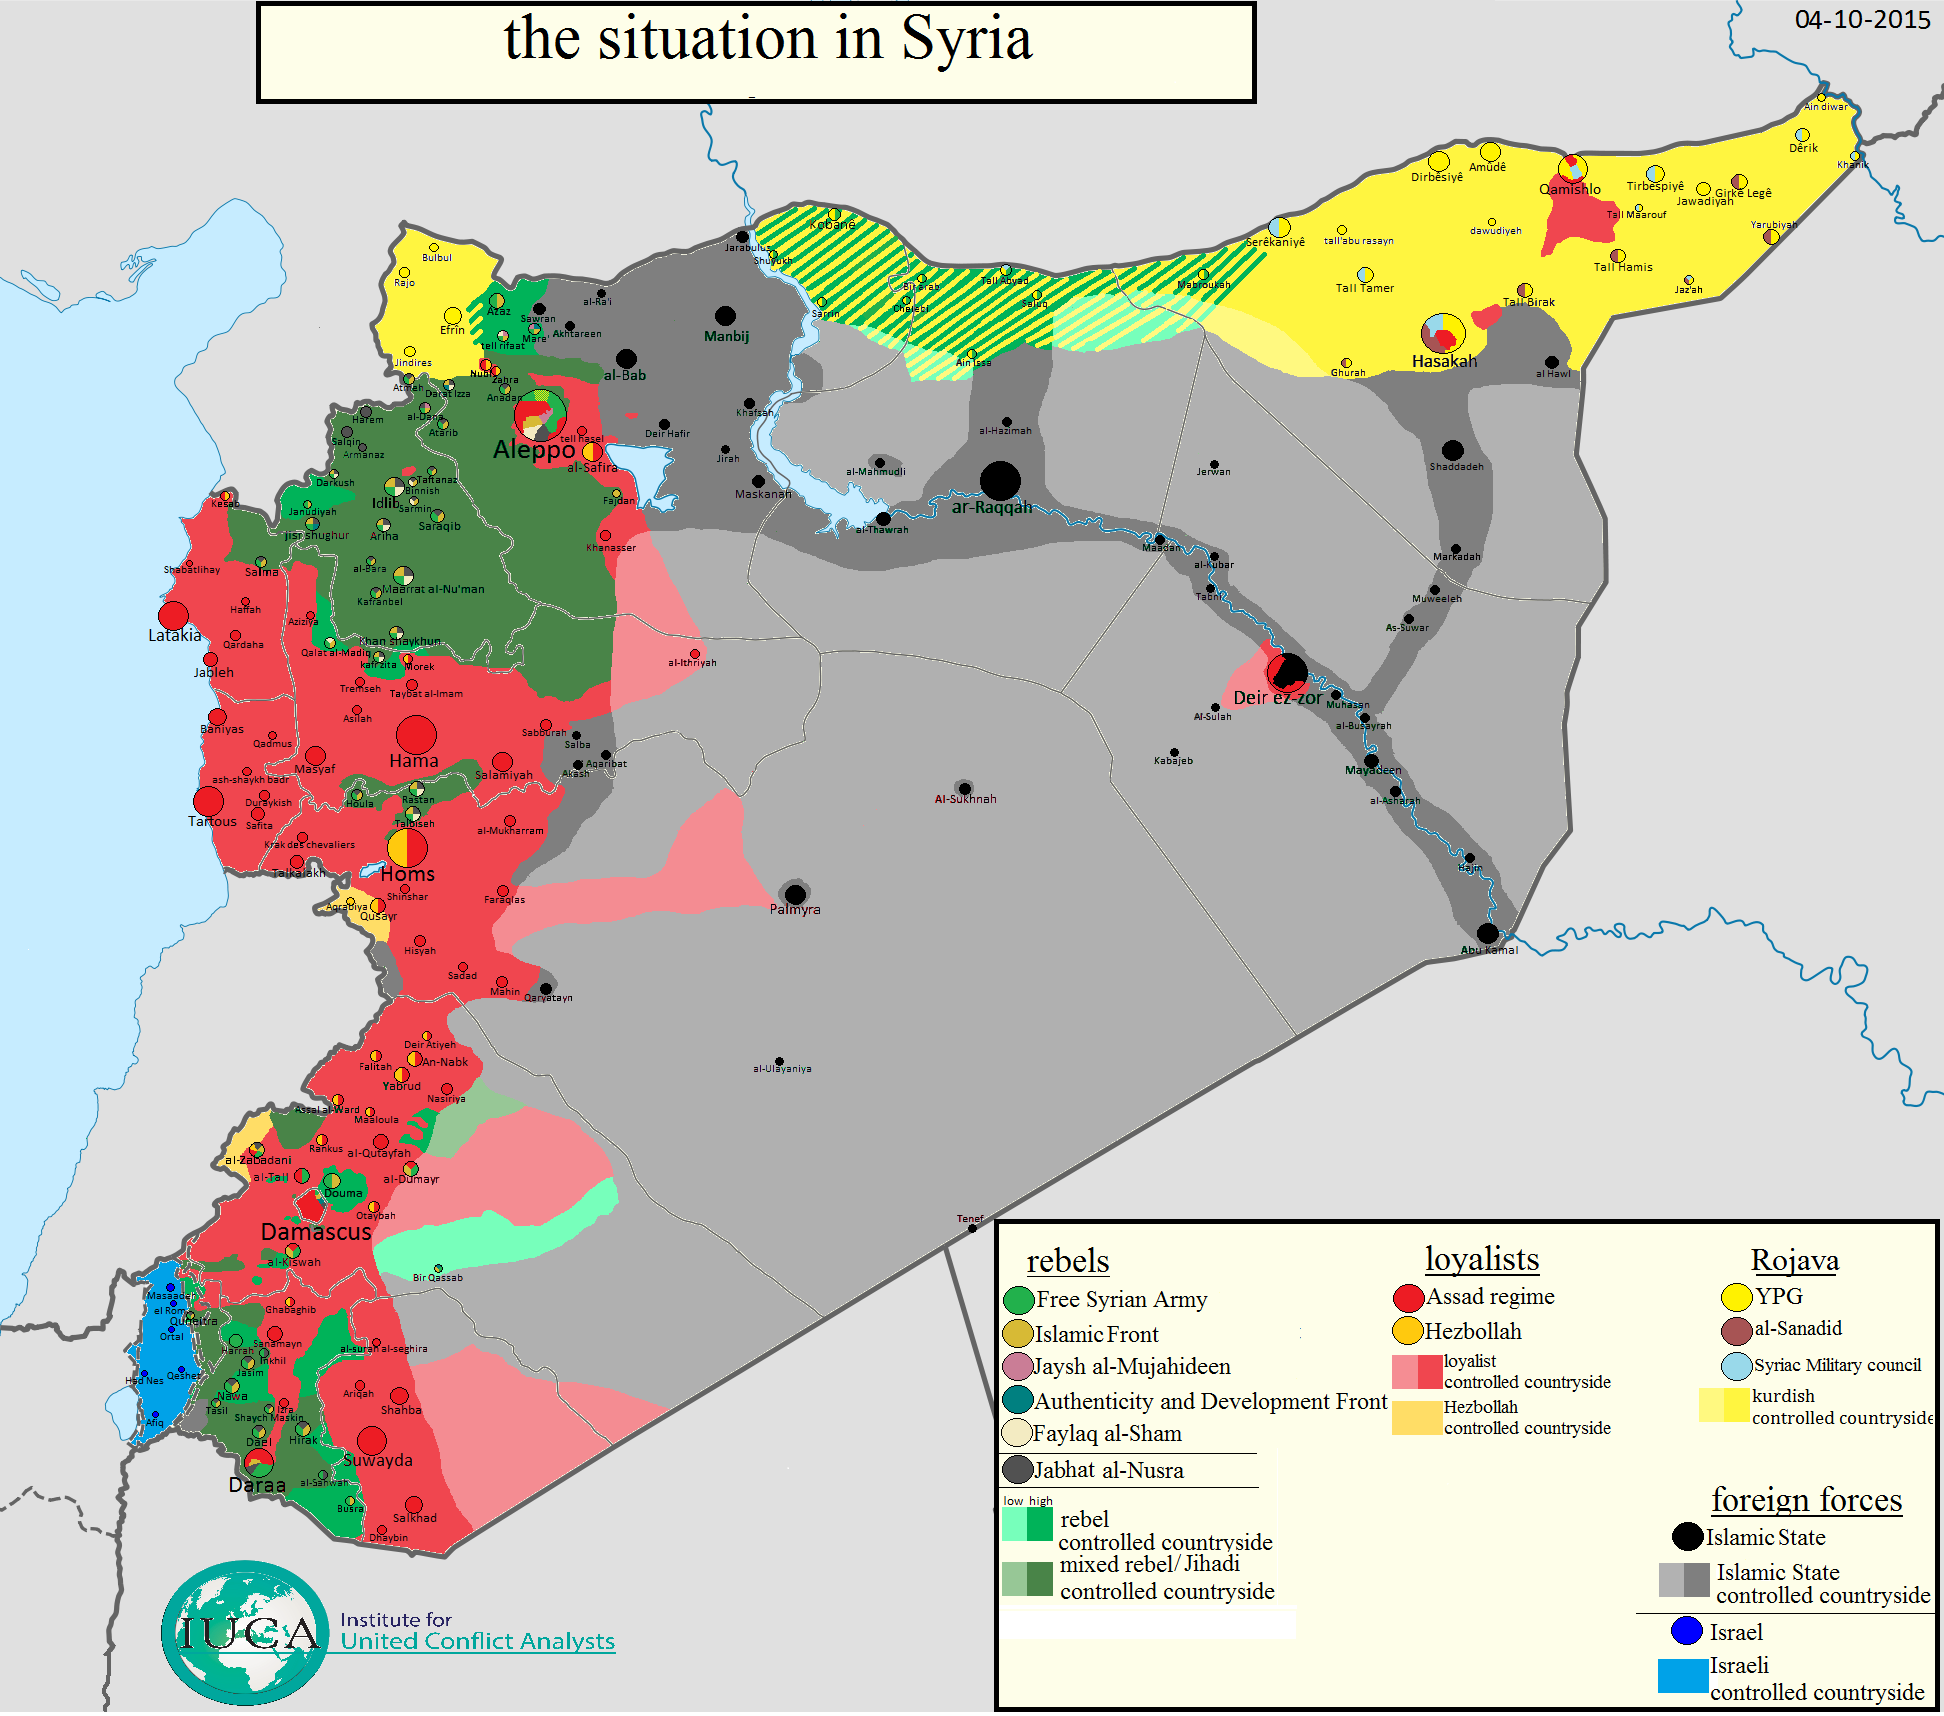 http://www.les-crises.fr/wp-content/uploads/2015/10/34-syrie-10-2015.png